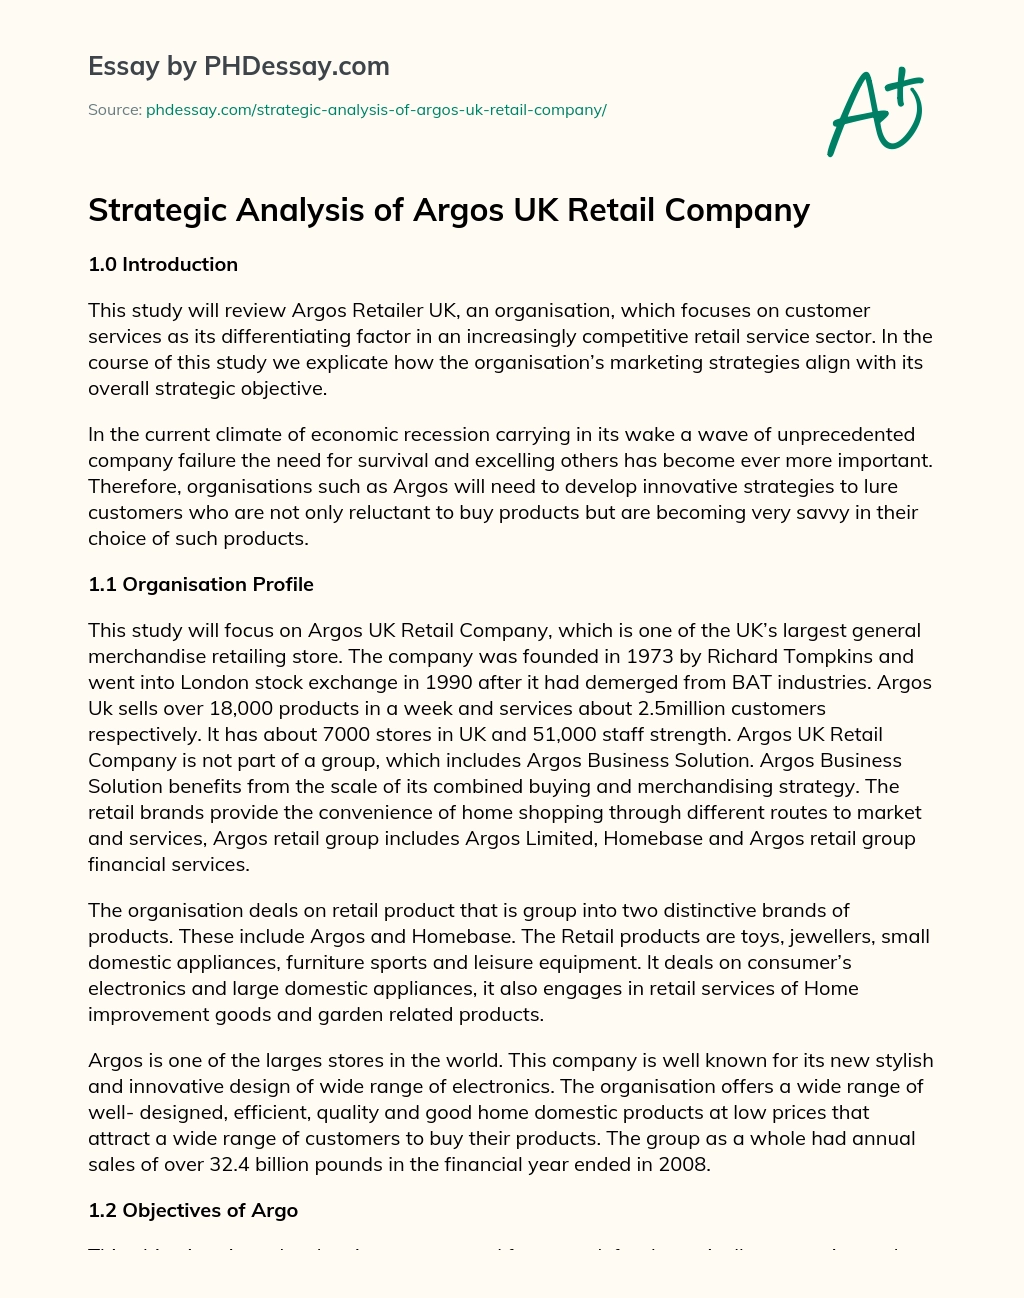 Strategic Analysis of Argos UK Retail Company essay